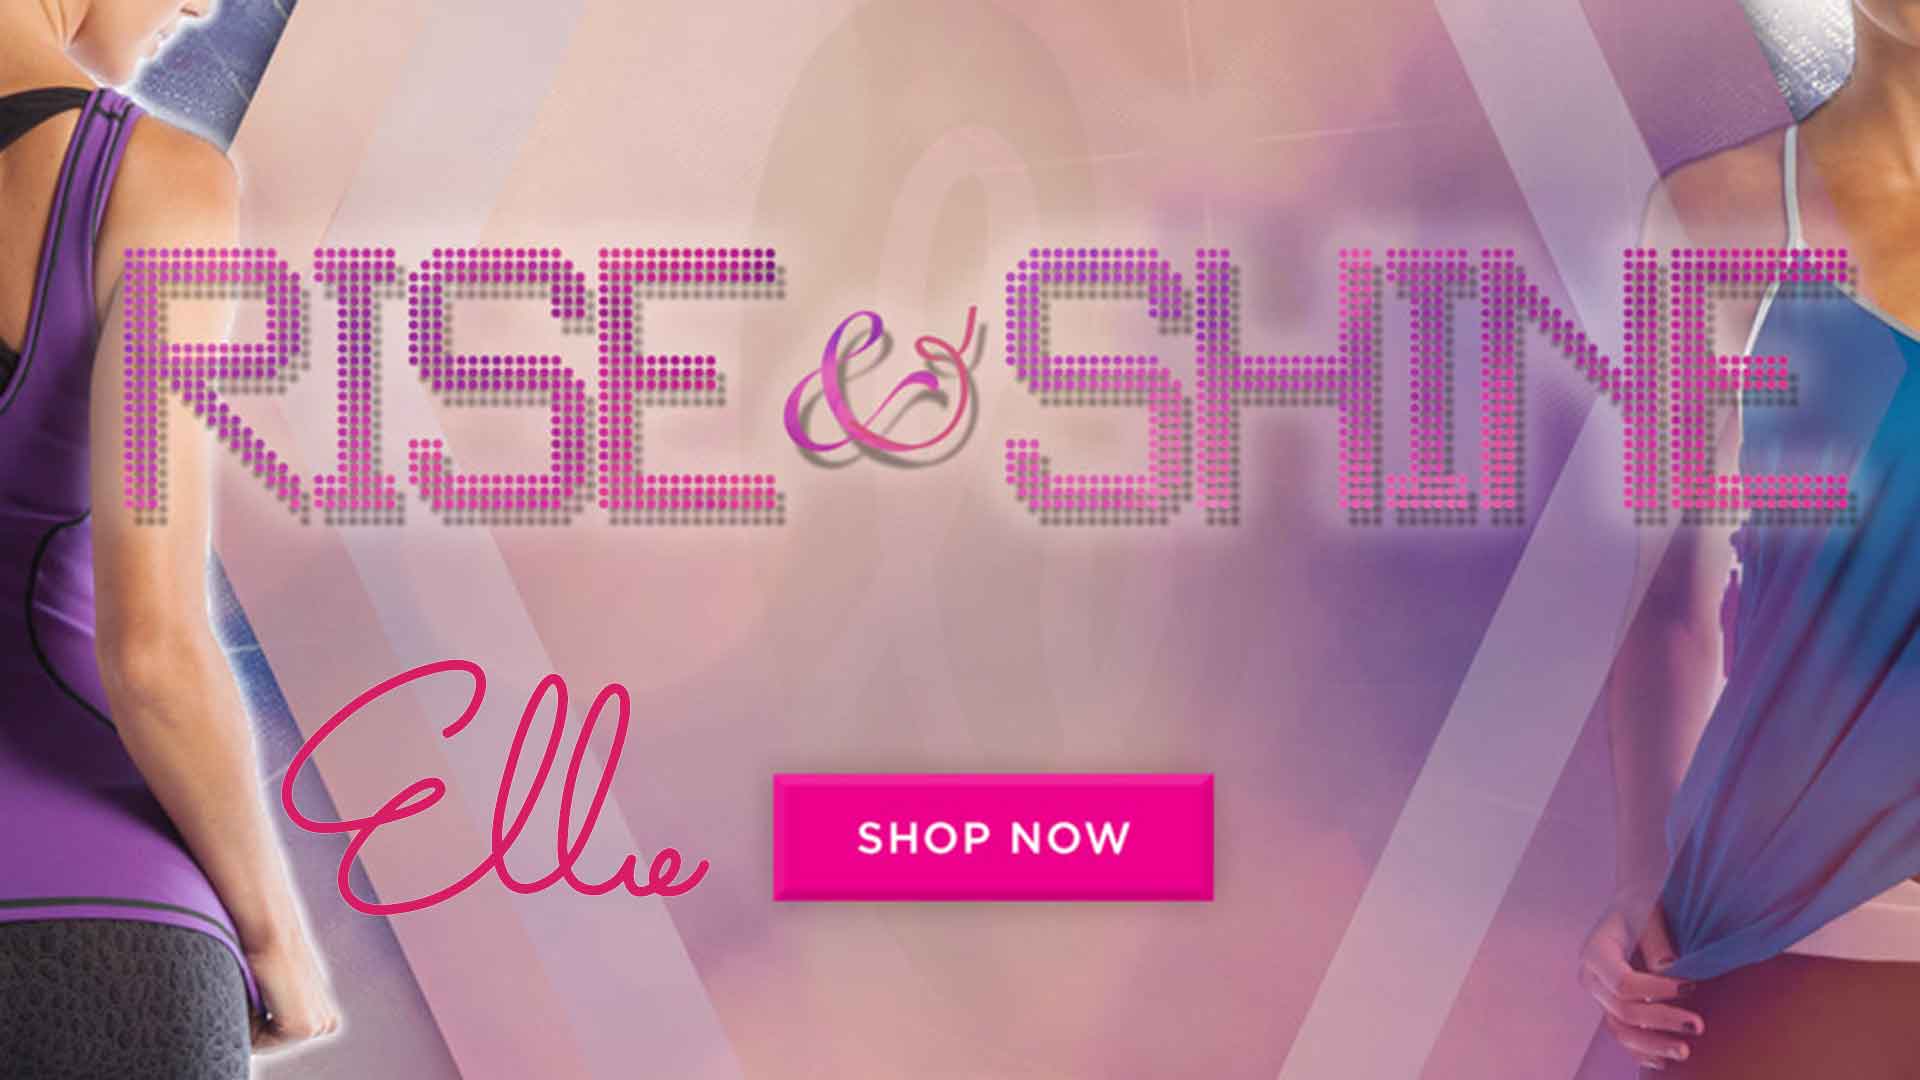 Ellie product launch image